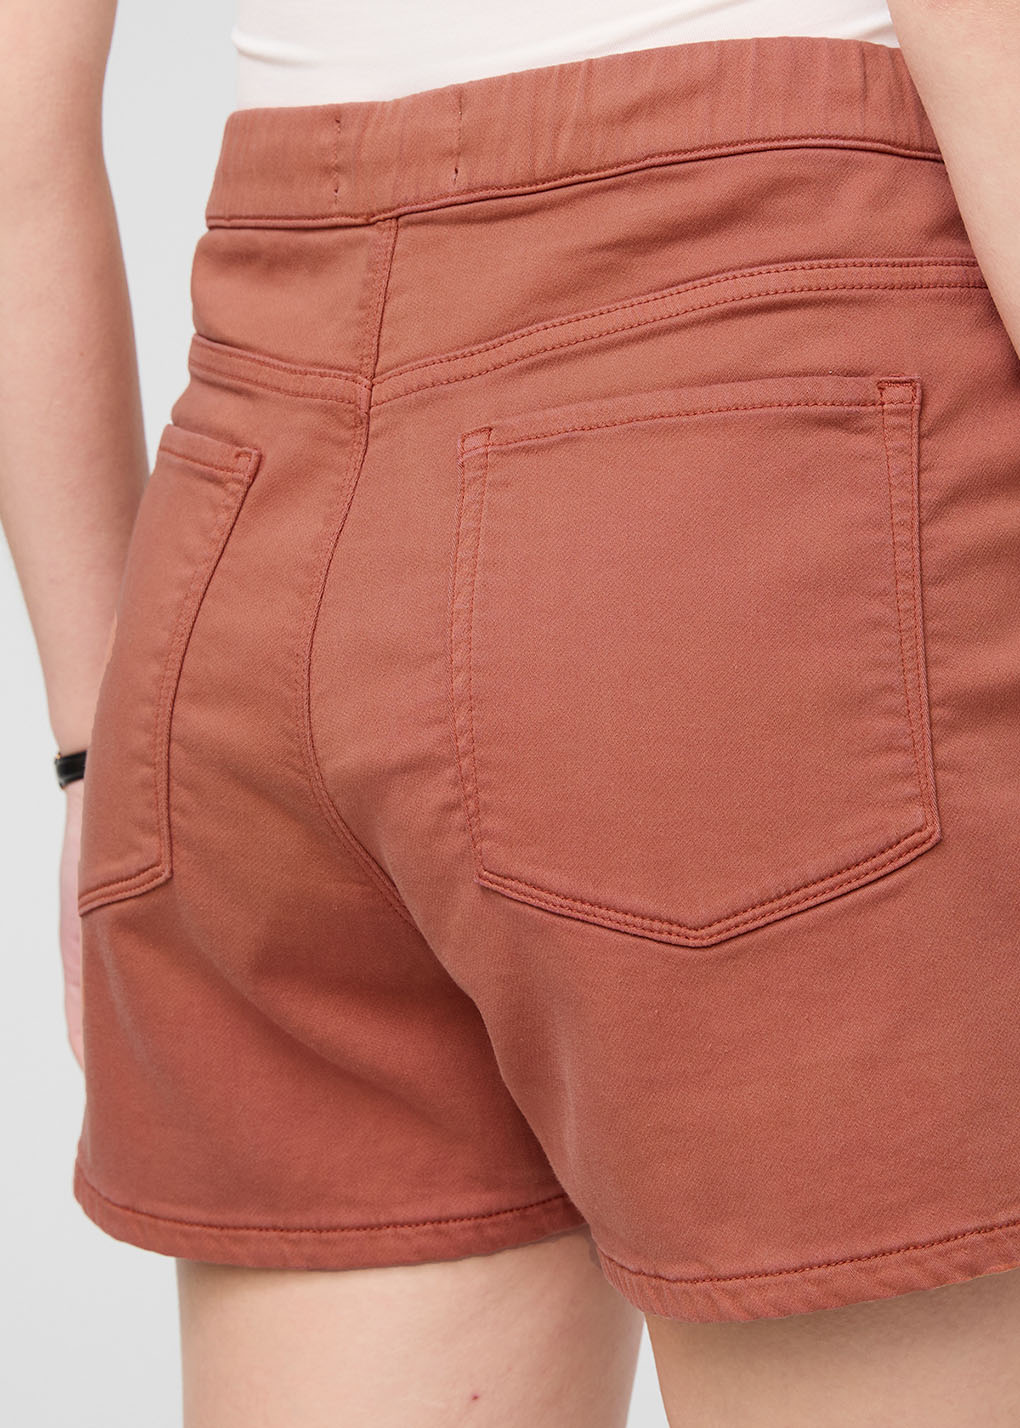 womens red pull on drawstring shorts back pocket detail